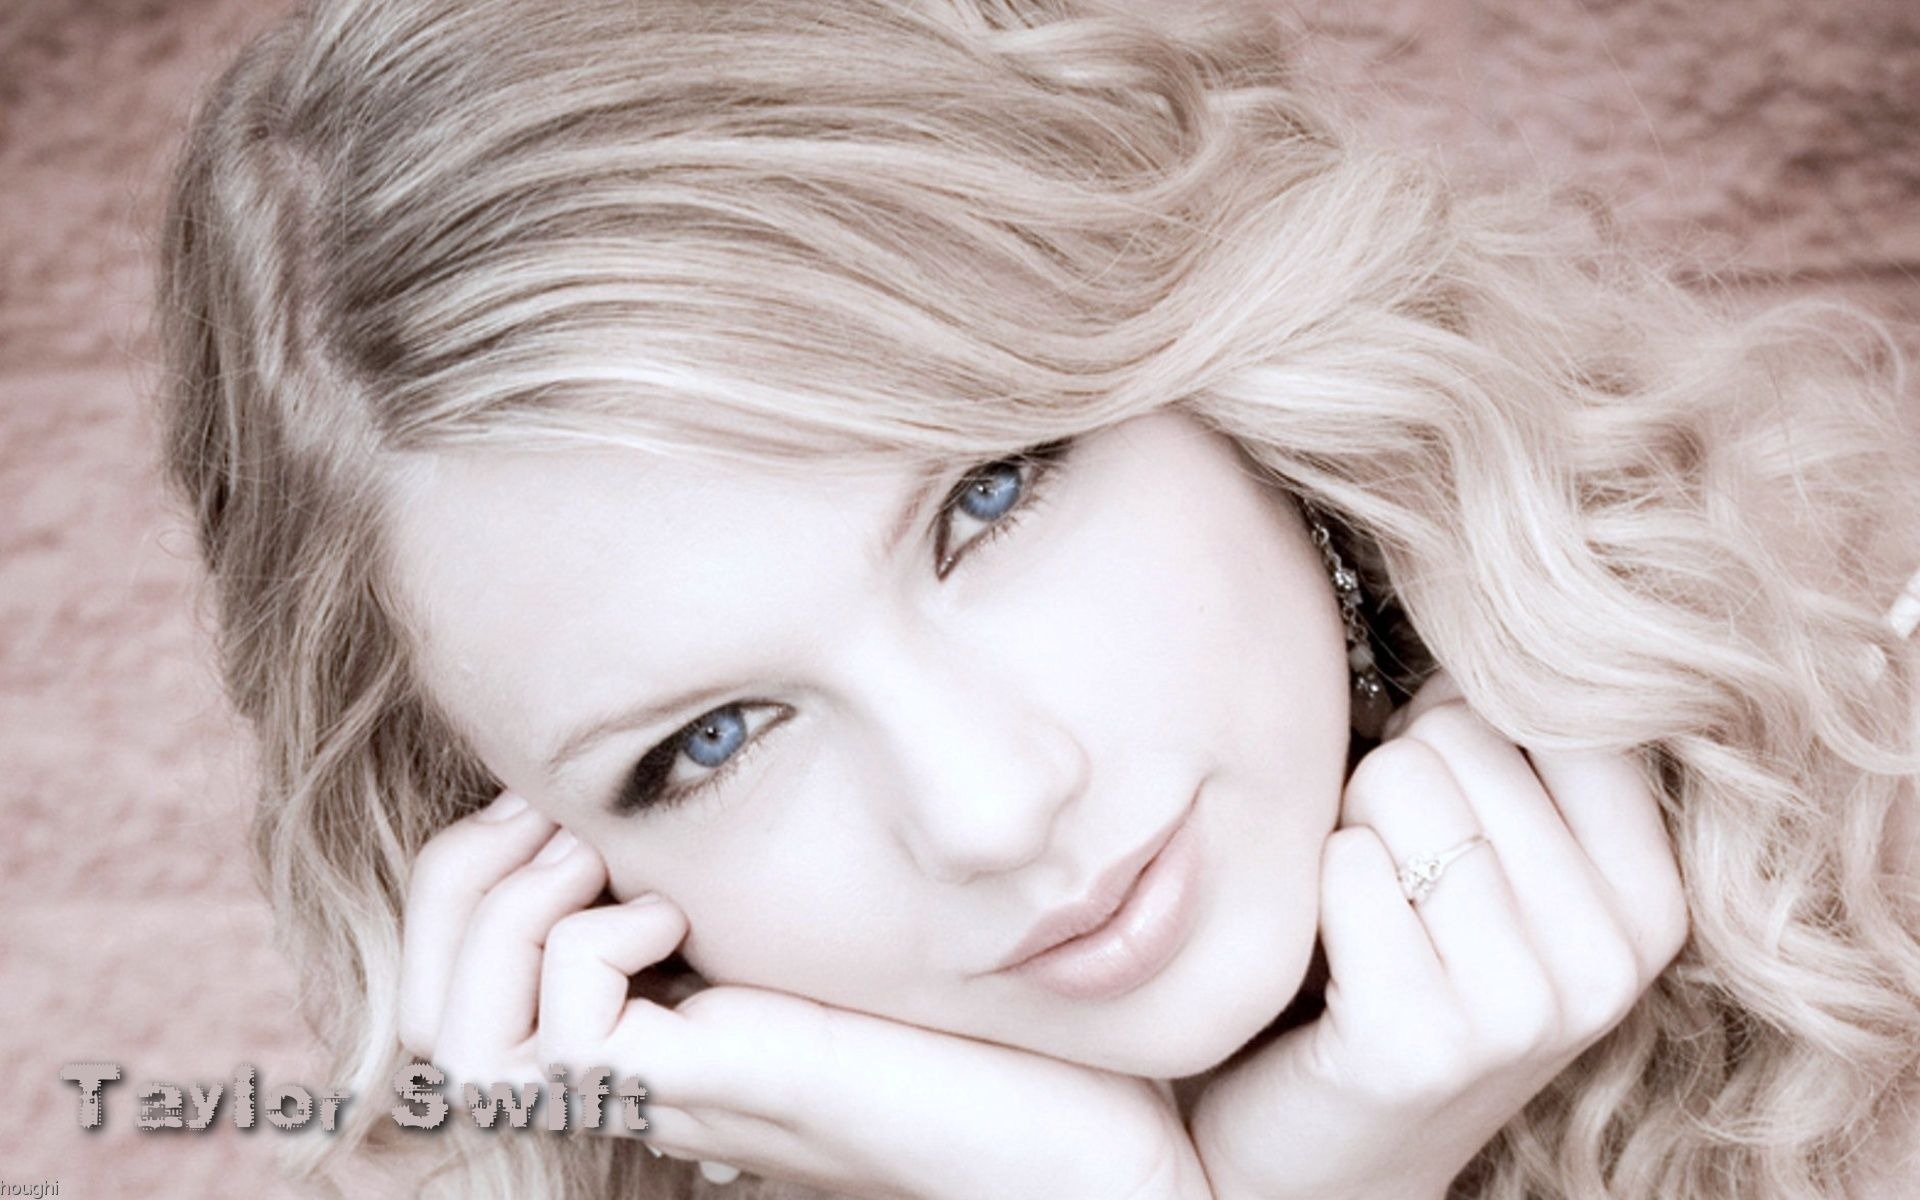 Taylor Swift 泰勒·斯威芙特 美女壁纸3 - 1920x1200